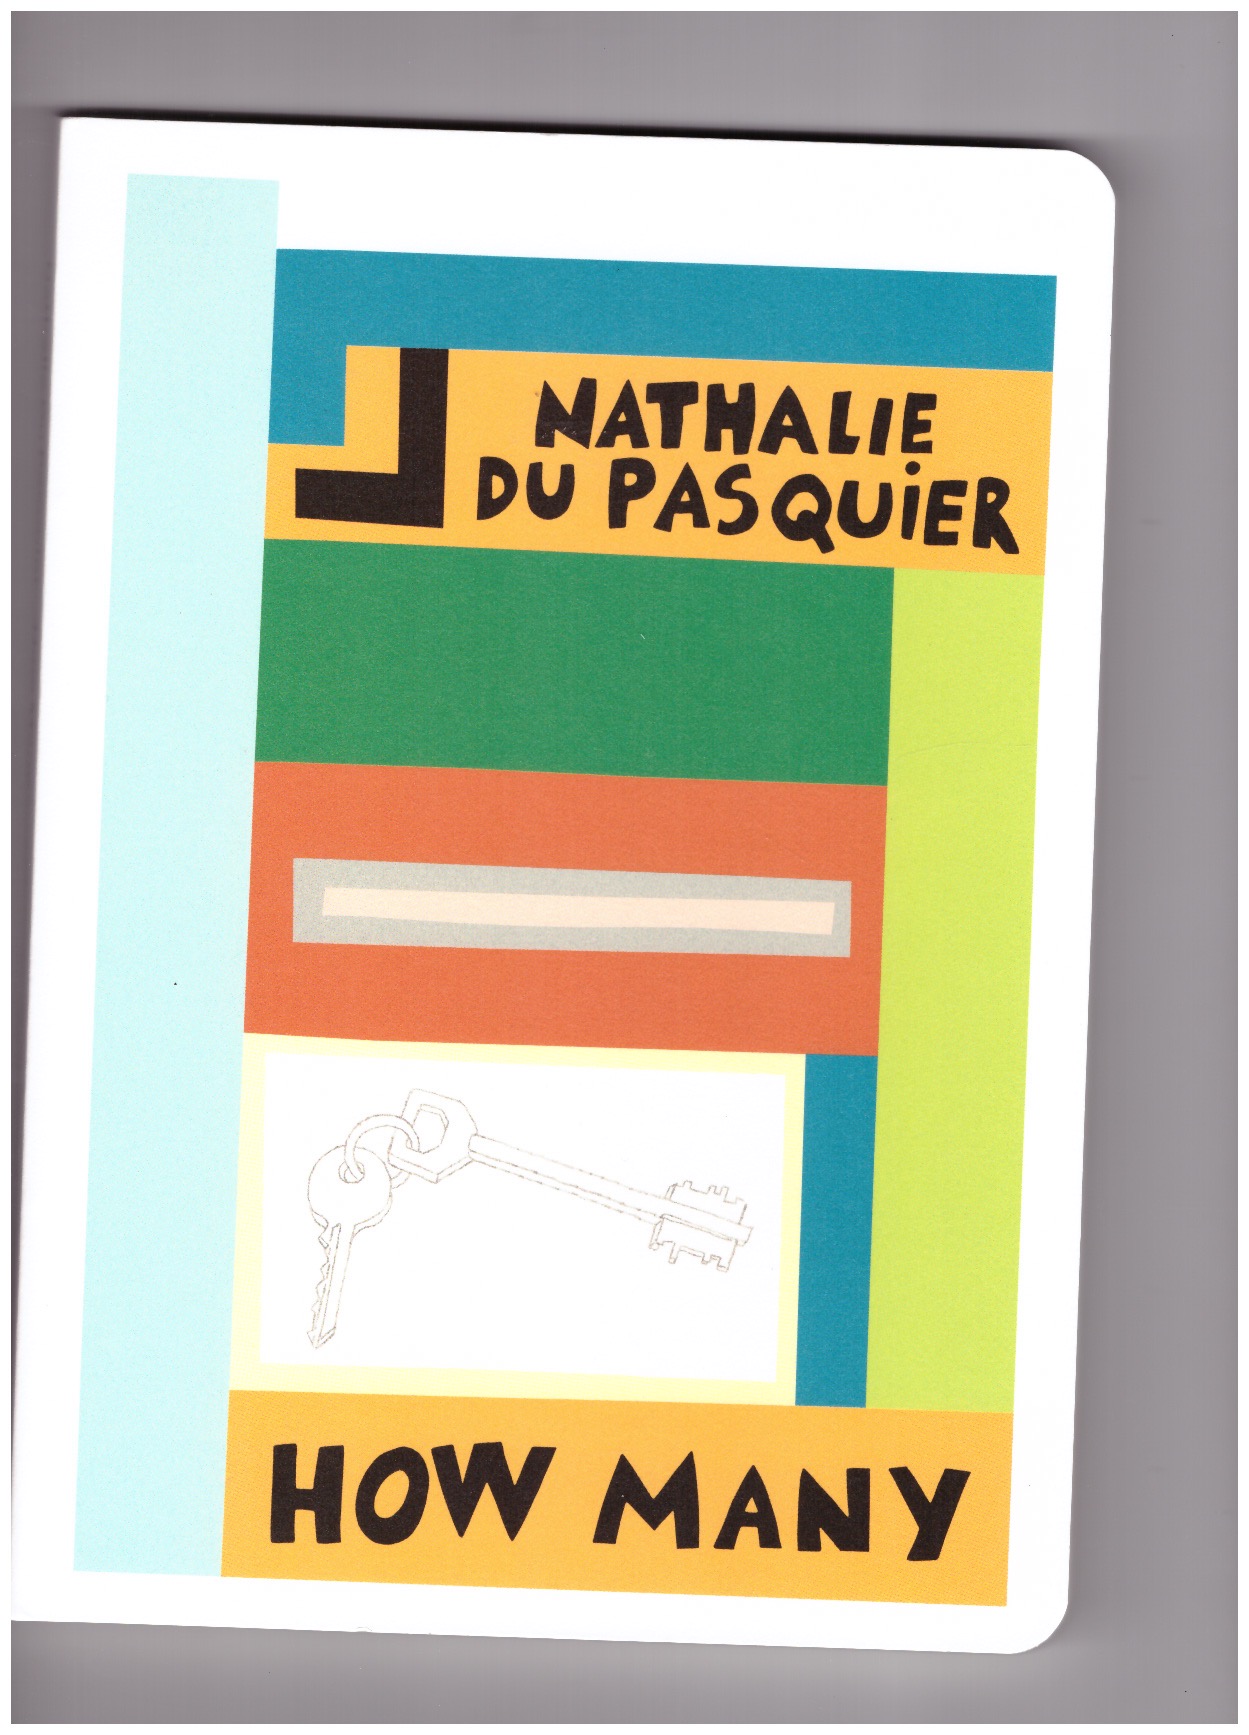 DU PASQUIER, Nathalie (ed.) - How Many